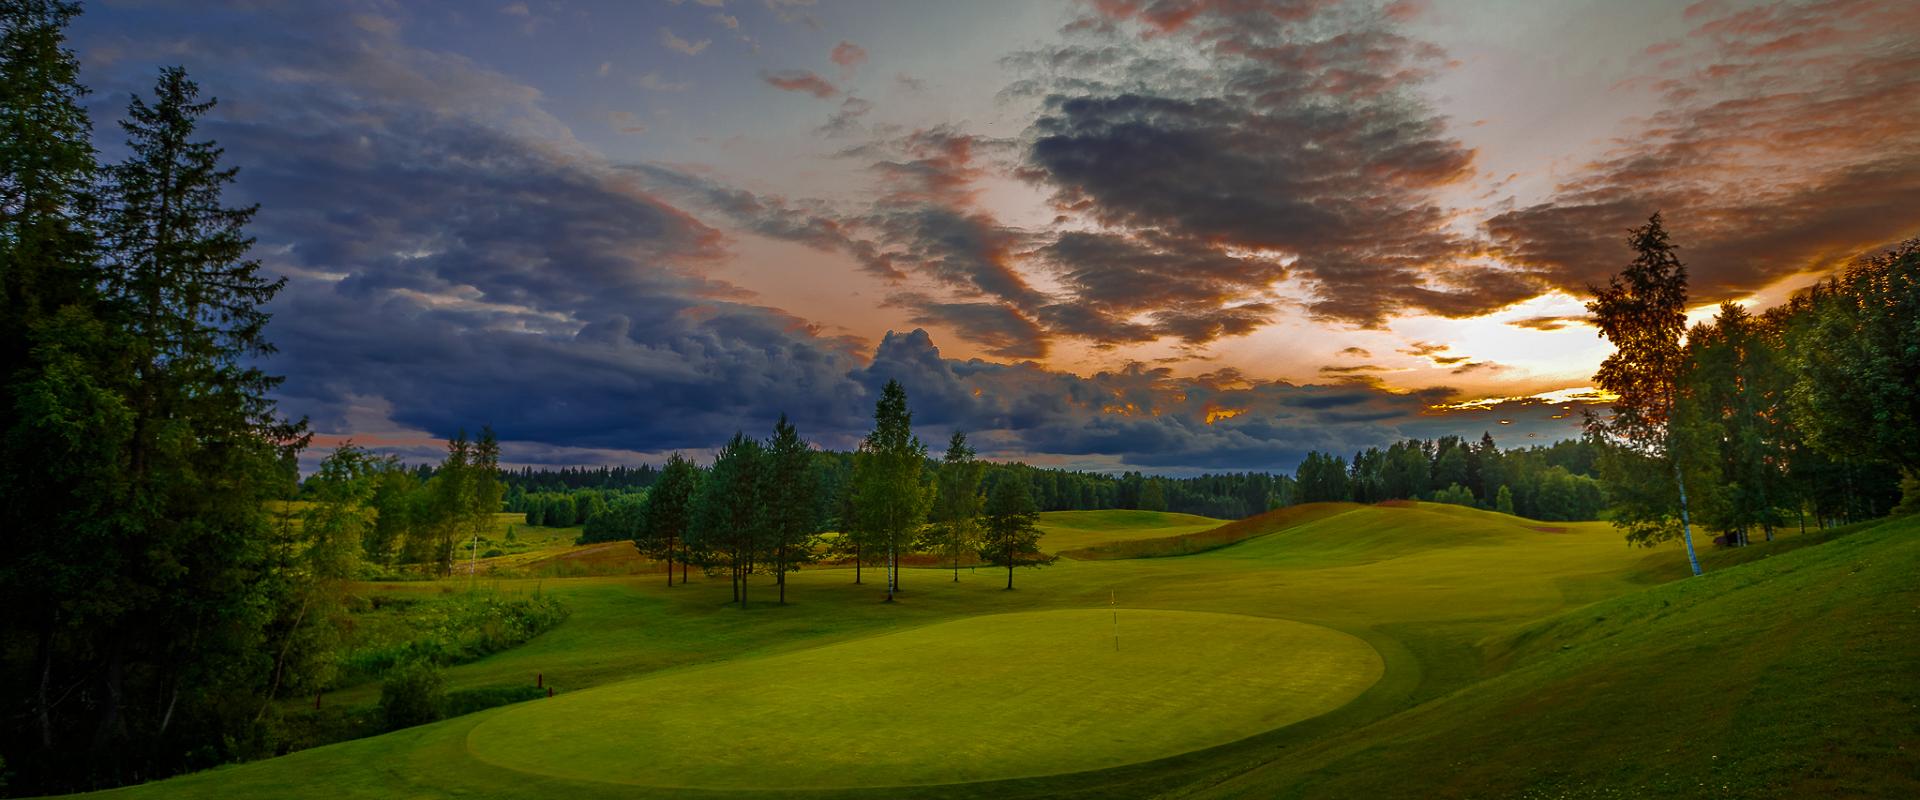 Otepää Golf & Country Club